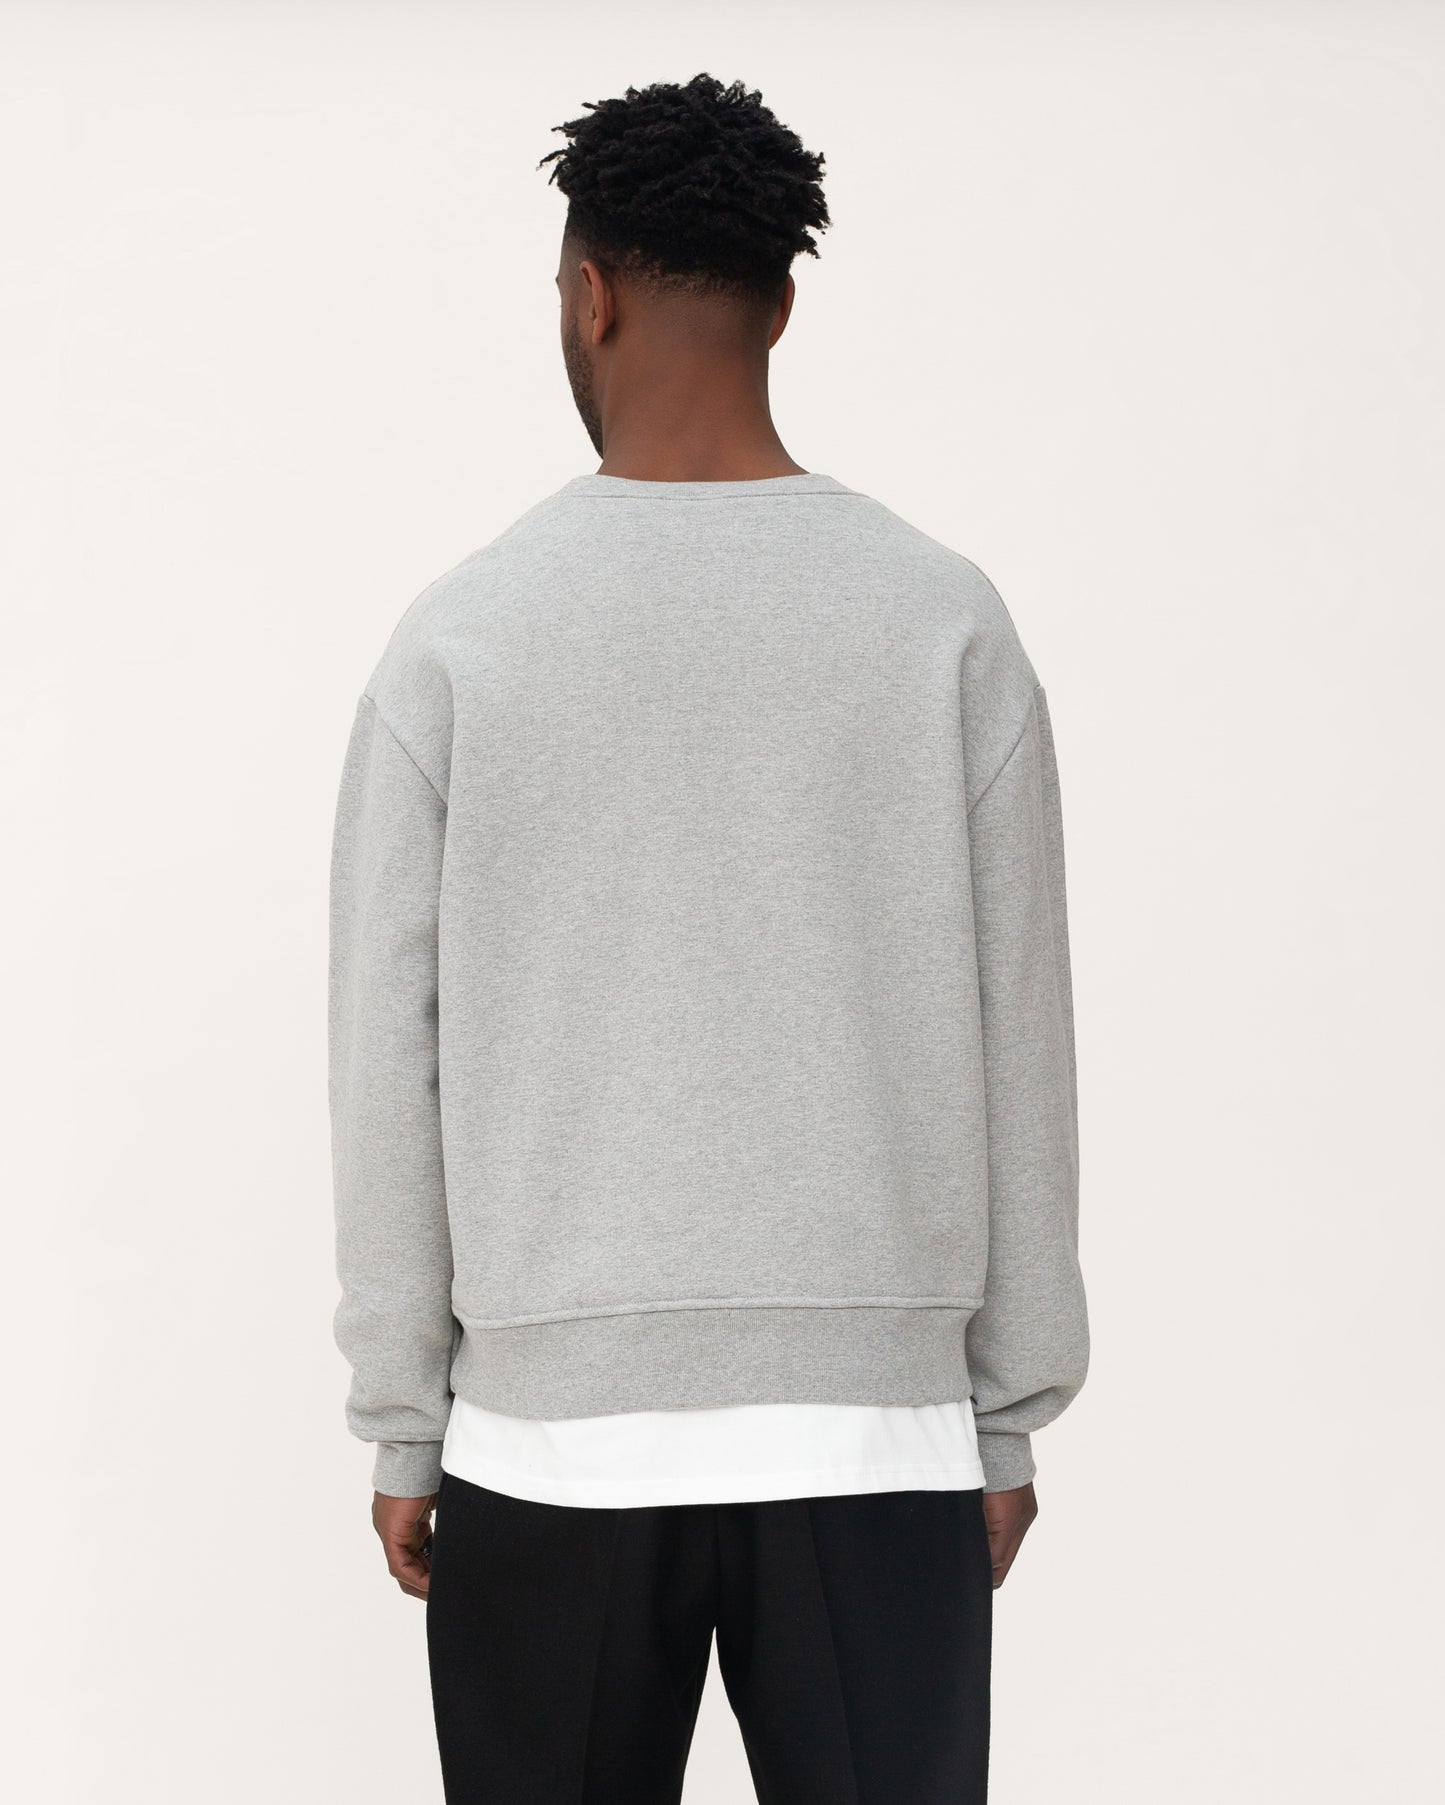 mens designer sweatshirts, mens grey sweatshirt, back side